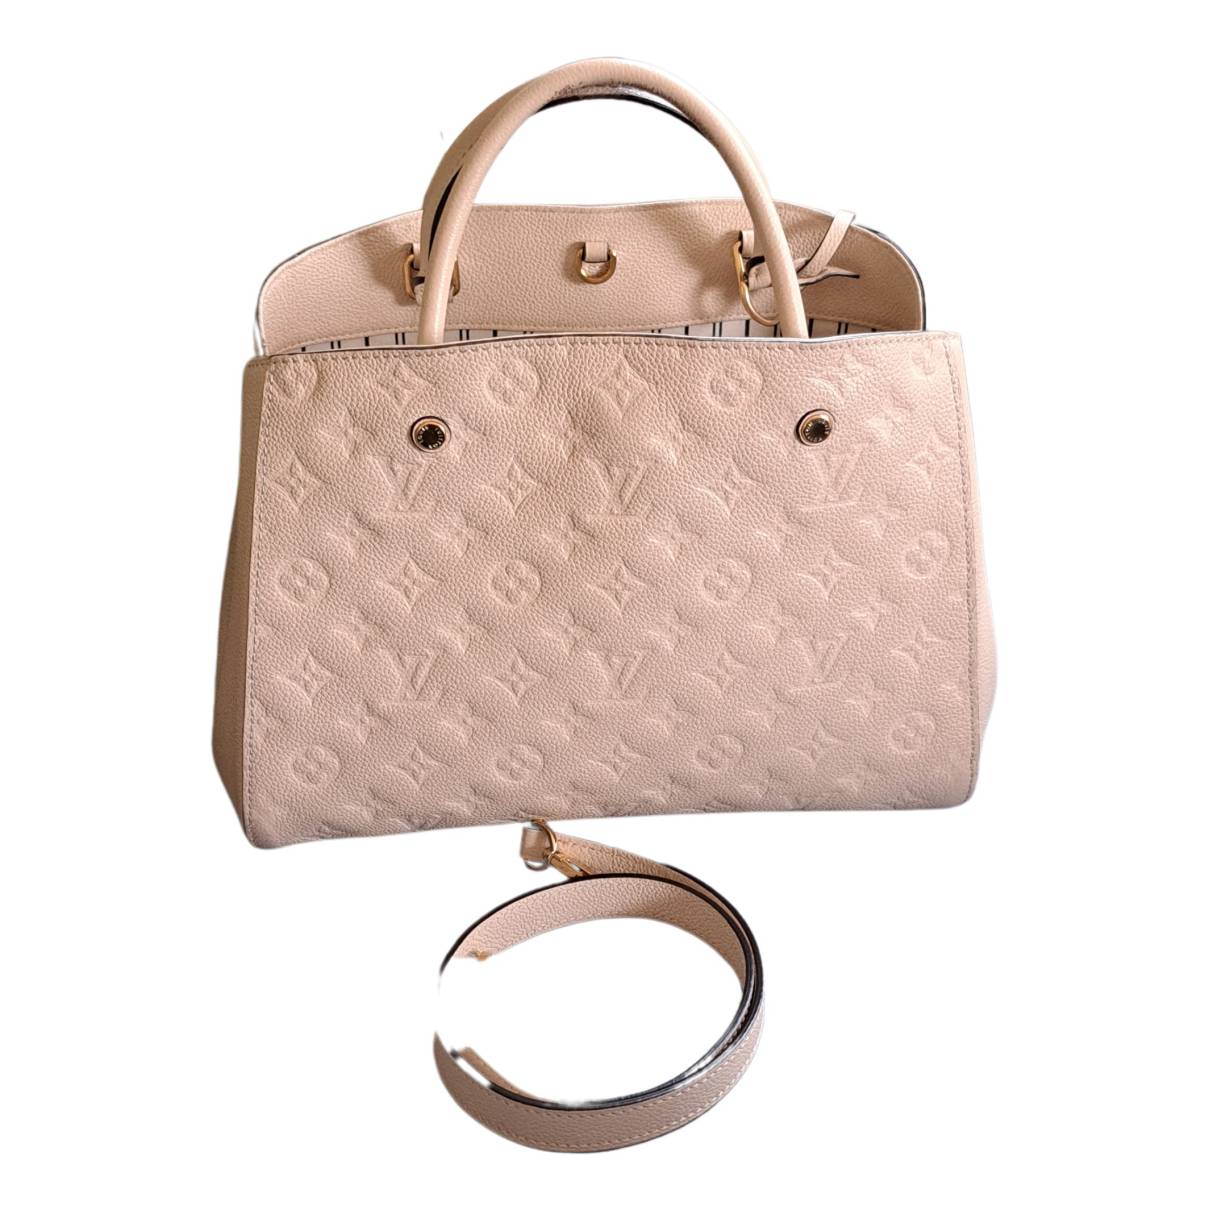 Montaigne leather handbag Louis Vuitton Beige in Leather - 31999749